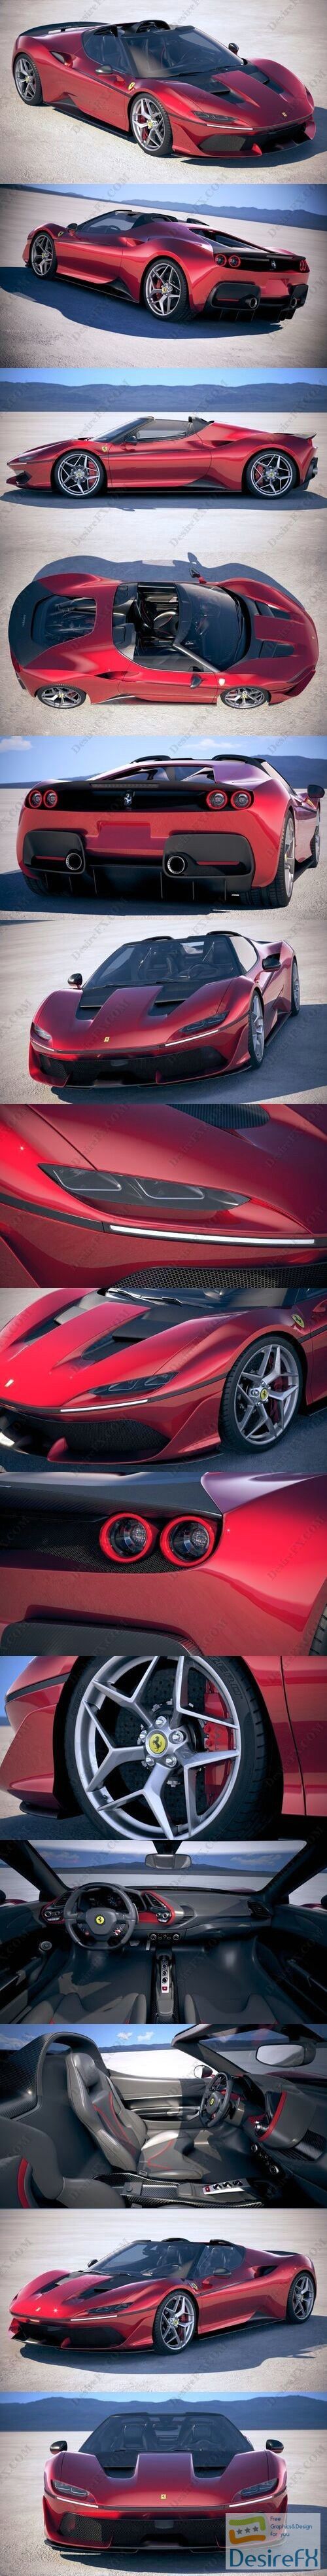 Ferrari J50 2017 3D Model